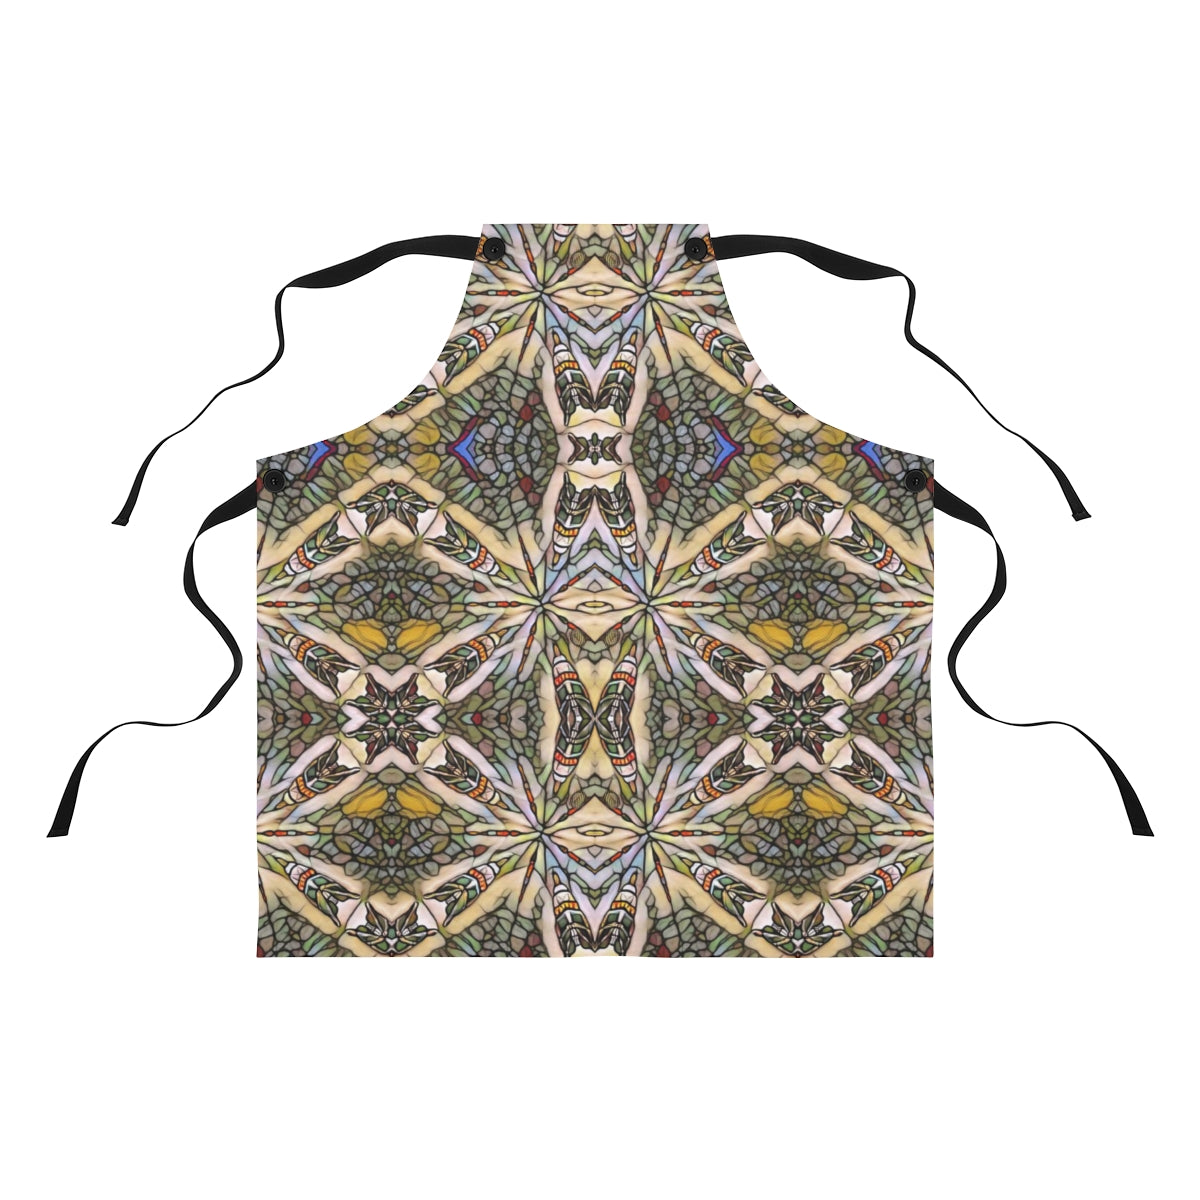 kitchen apron showing full pattern view